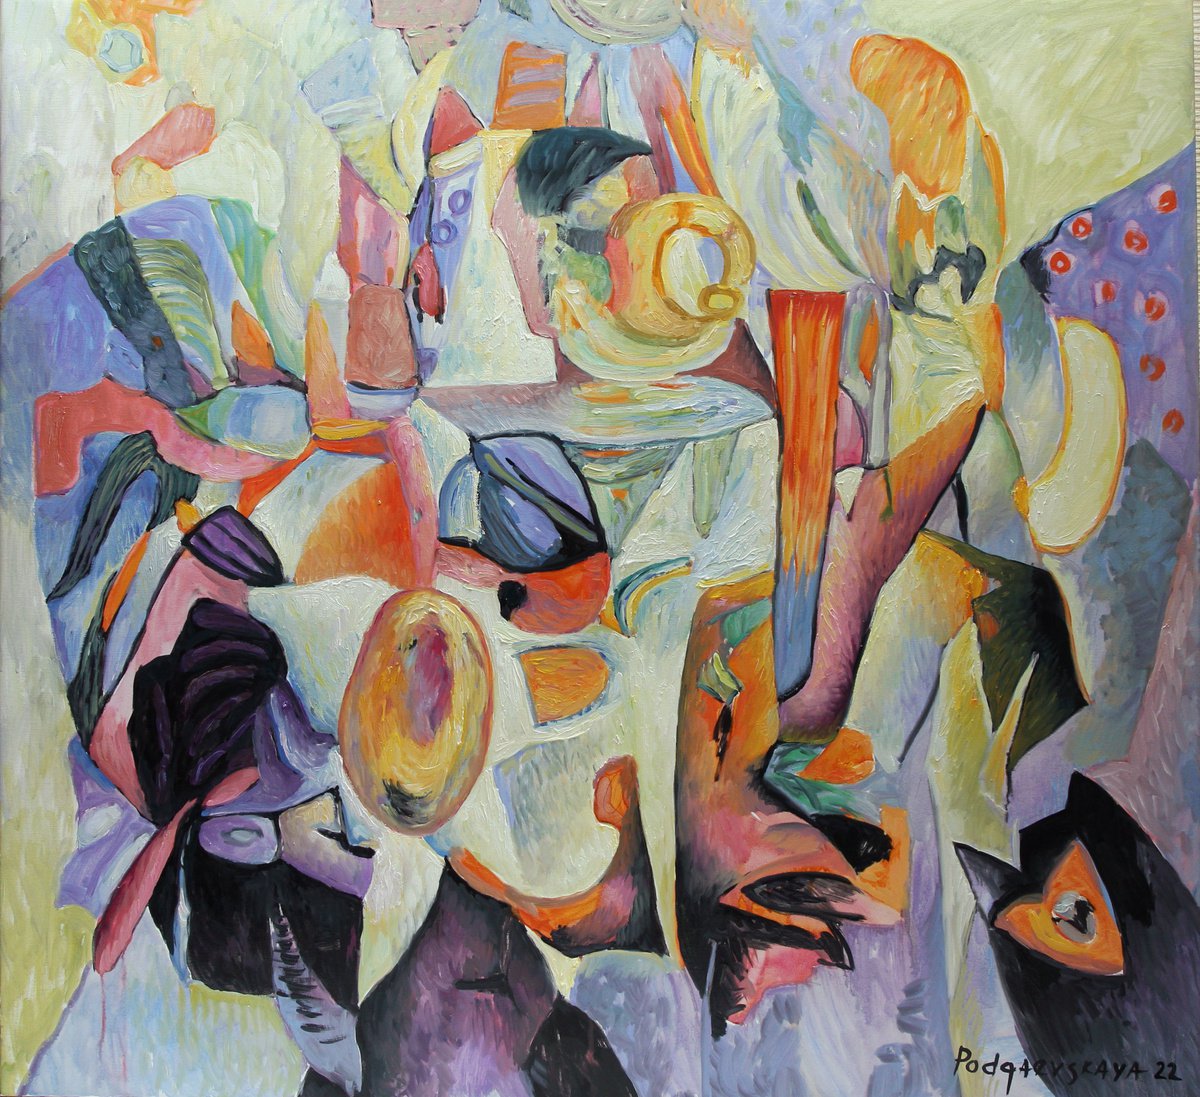 Composition #45 by Marina Podgaevskaya